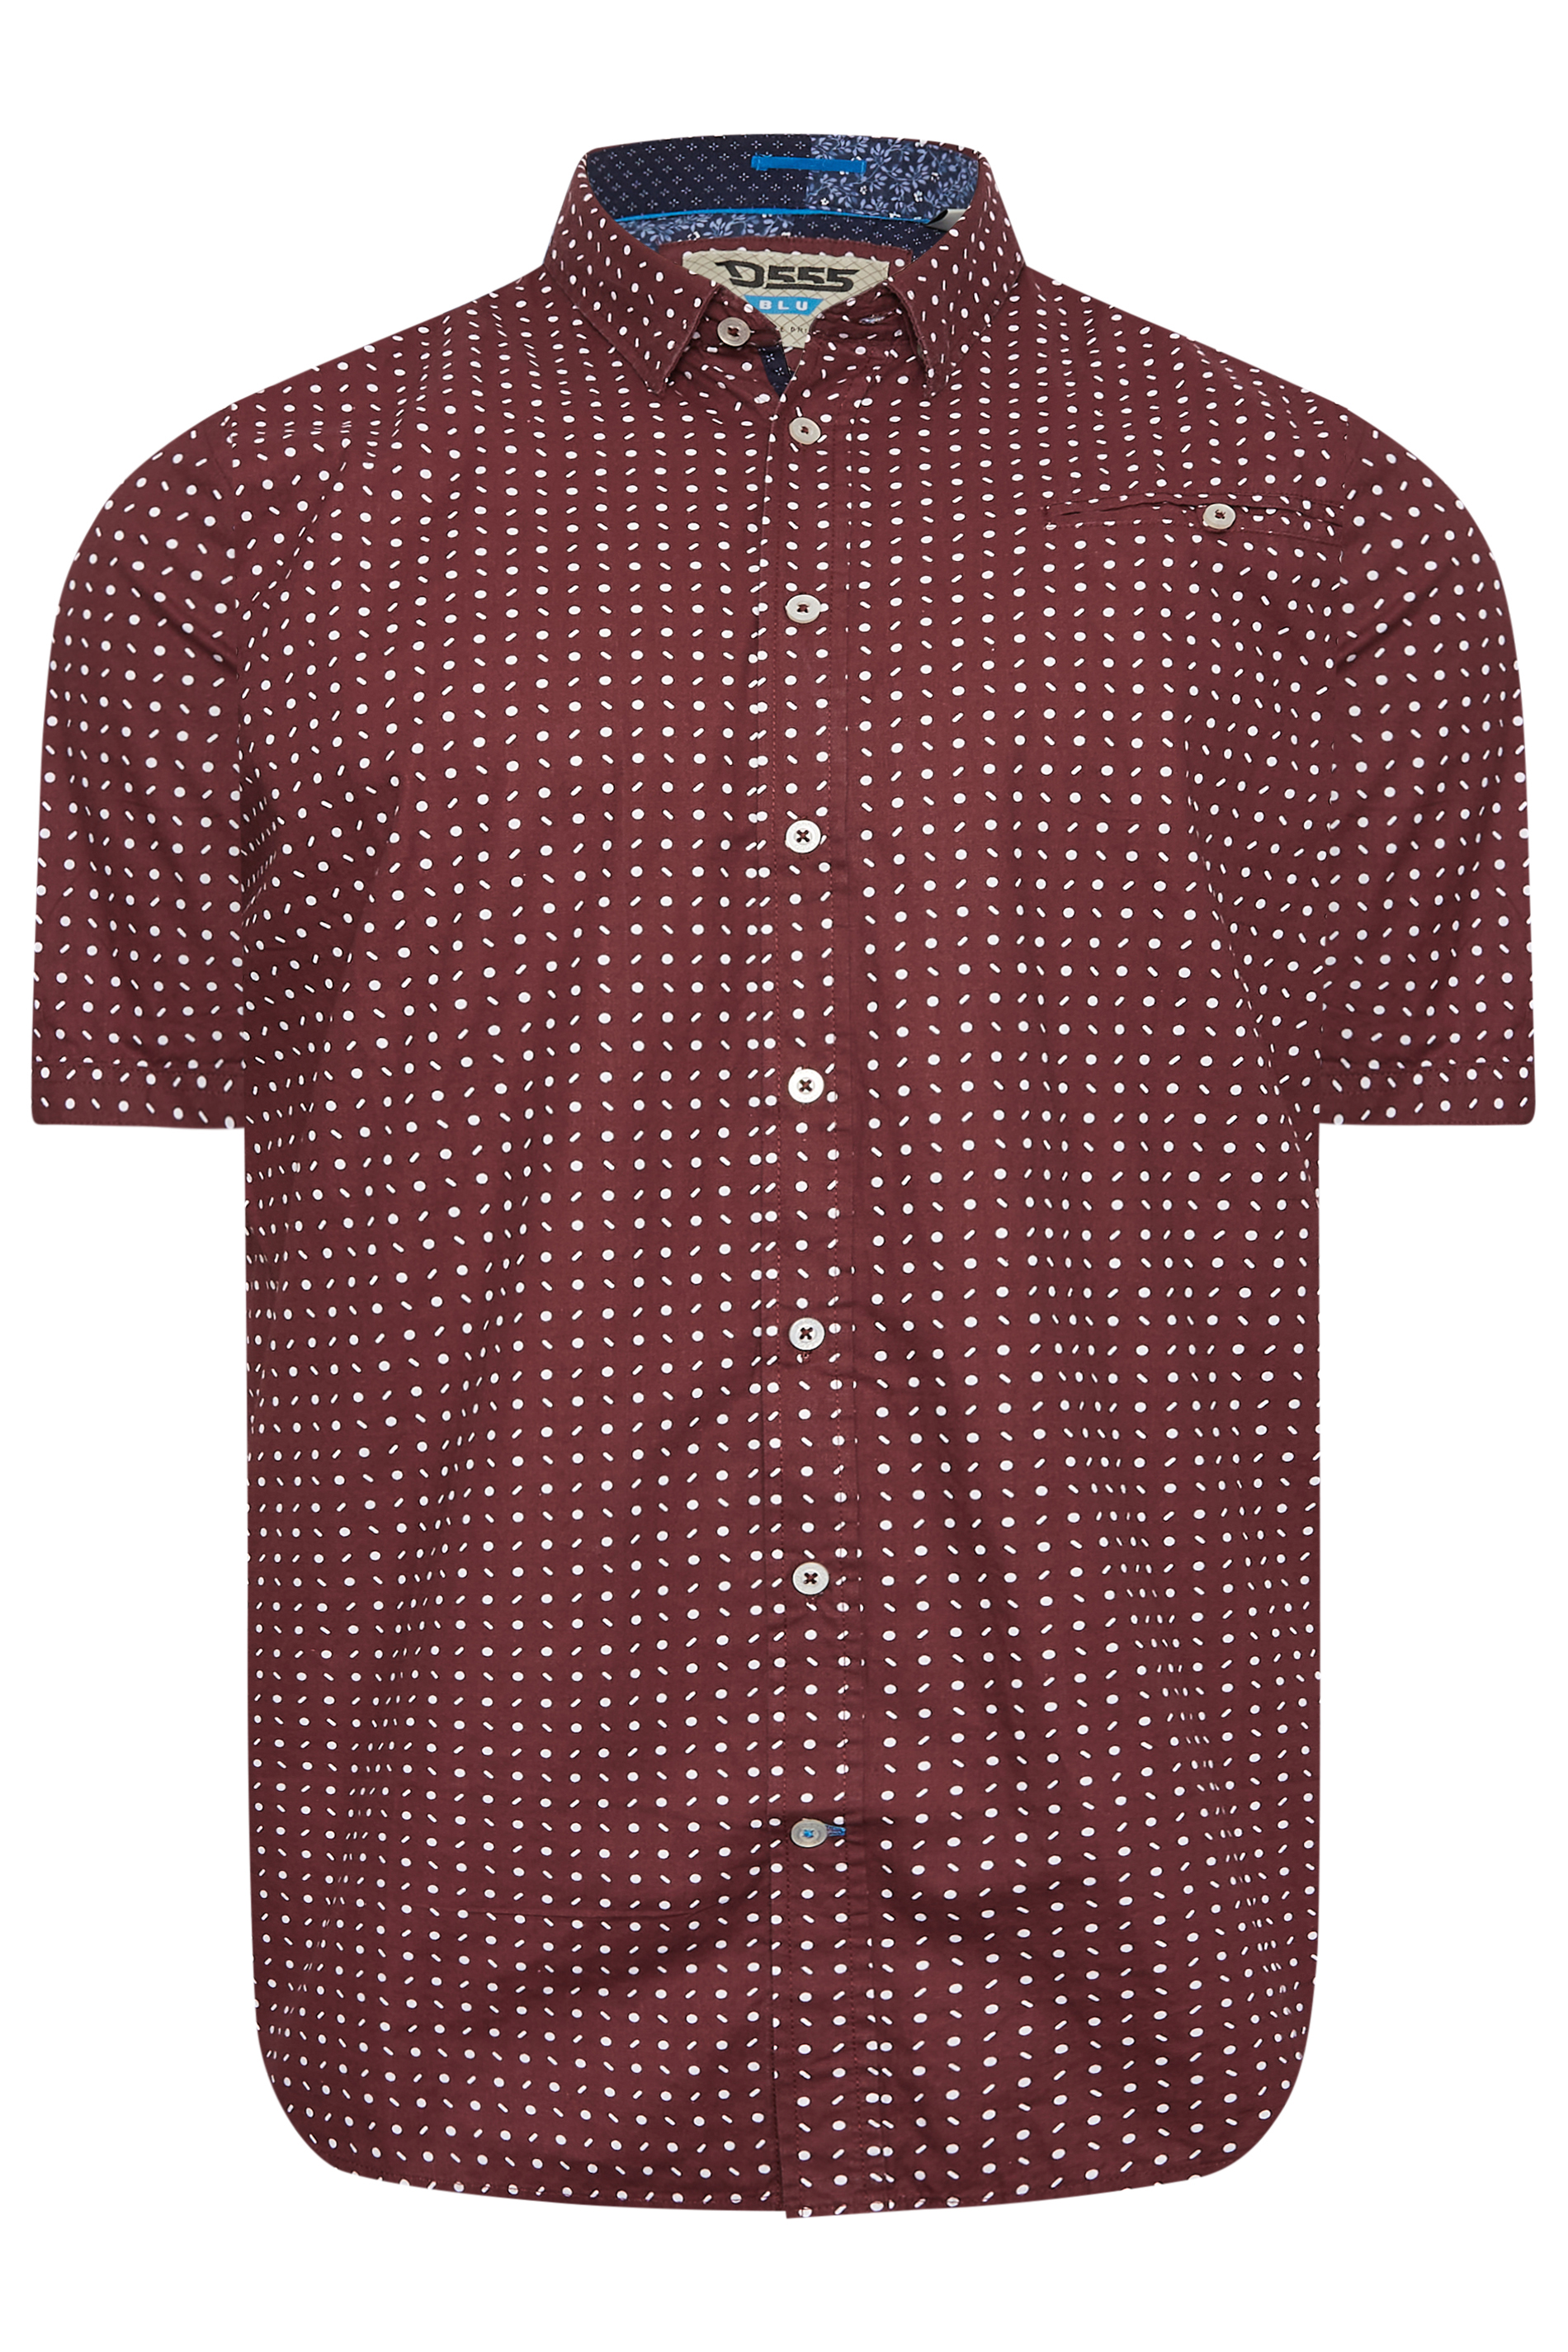 D555 Big & Tall Burgundy Red Spot Button Shirt | BadRhino 3